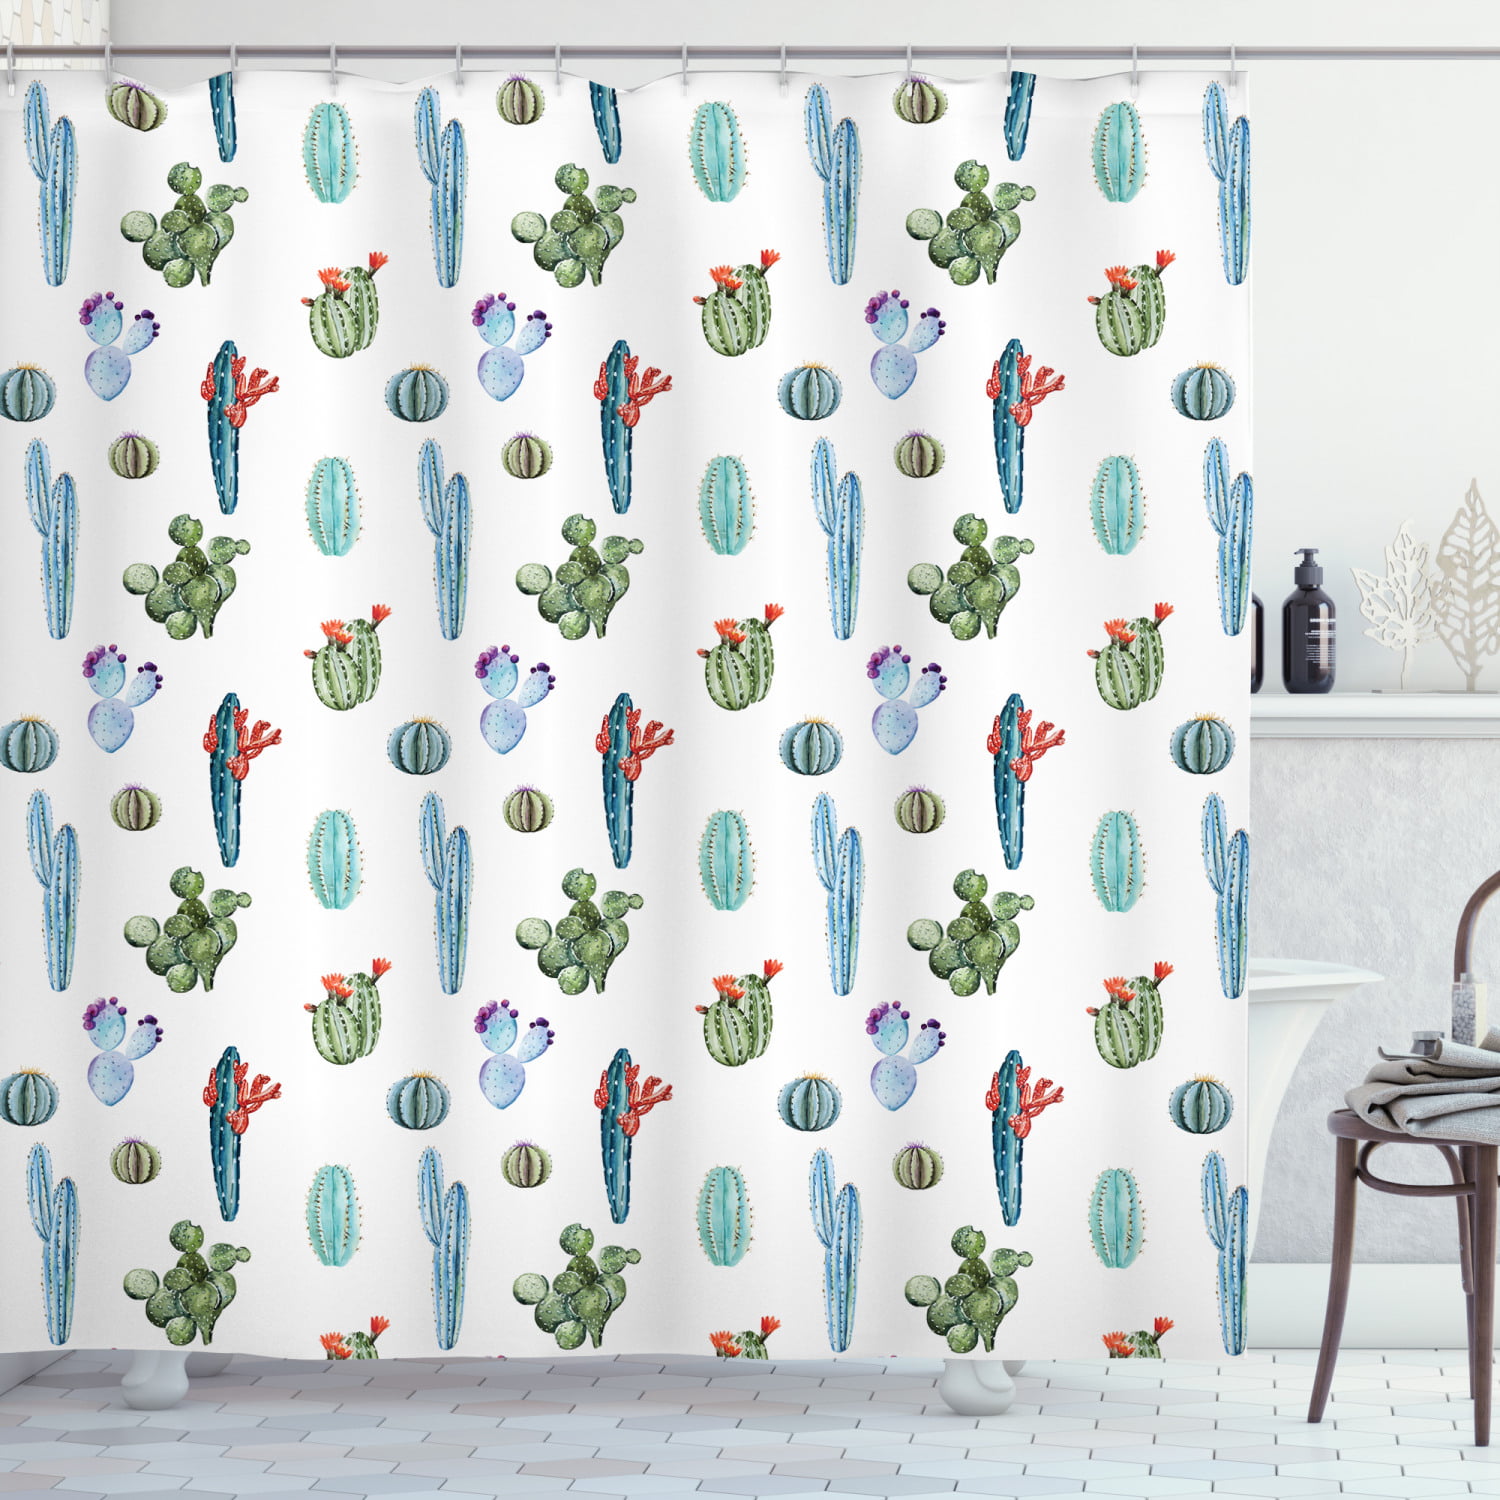 Nature Plant Succulents Cactus Waterproof Fabric Shower Curtain Liner & 12 Hooks 